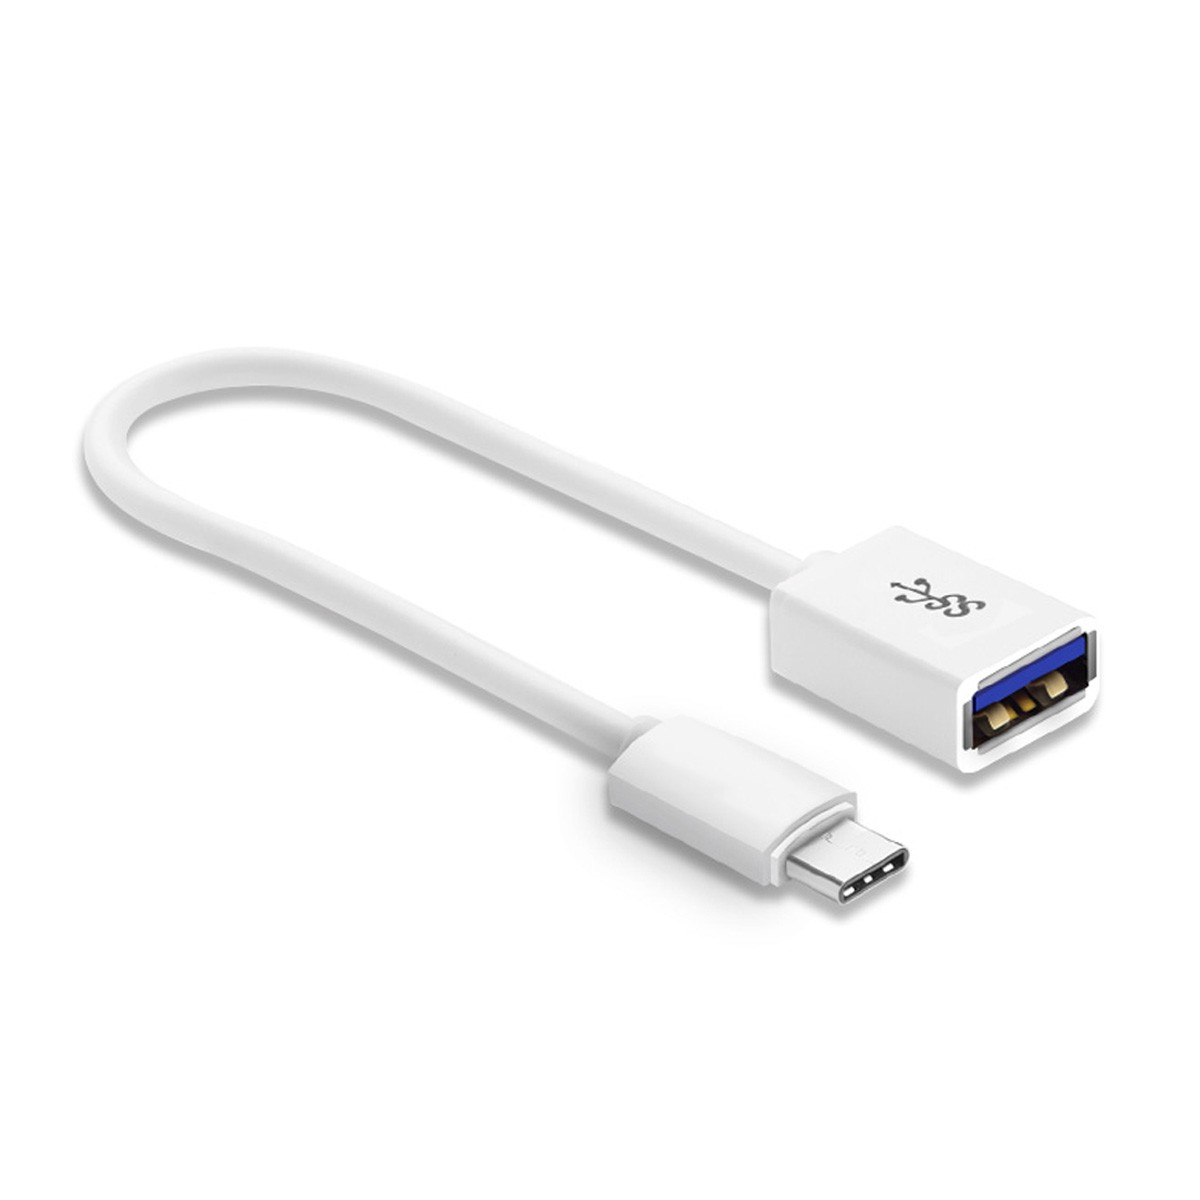 Audiophonics - Cable Female USB-A 3.0 to Male USB-C OTG Copper White PVC  sheath 10cm